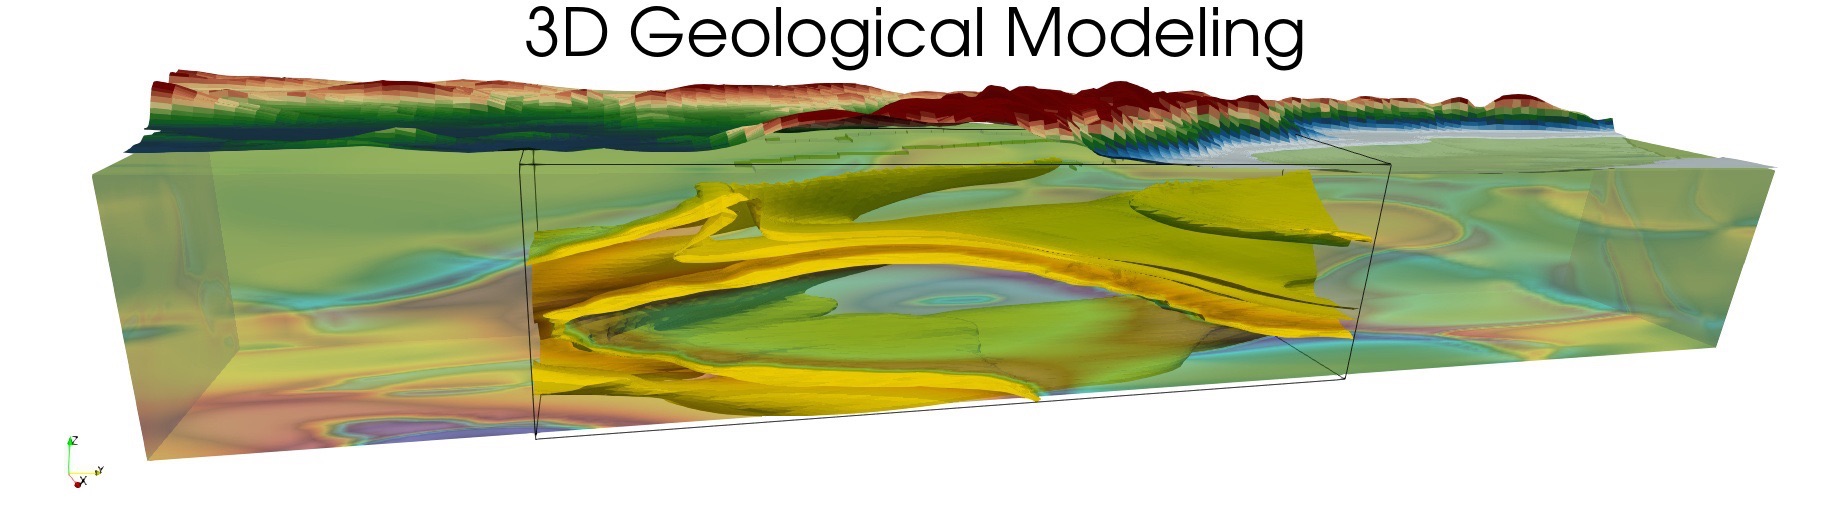 3D Geological Modeling